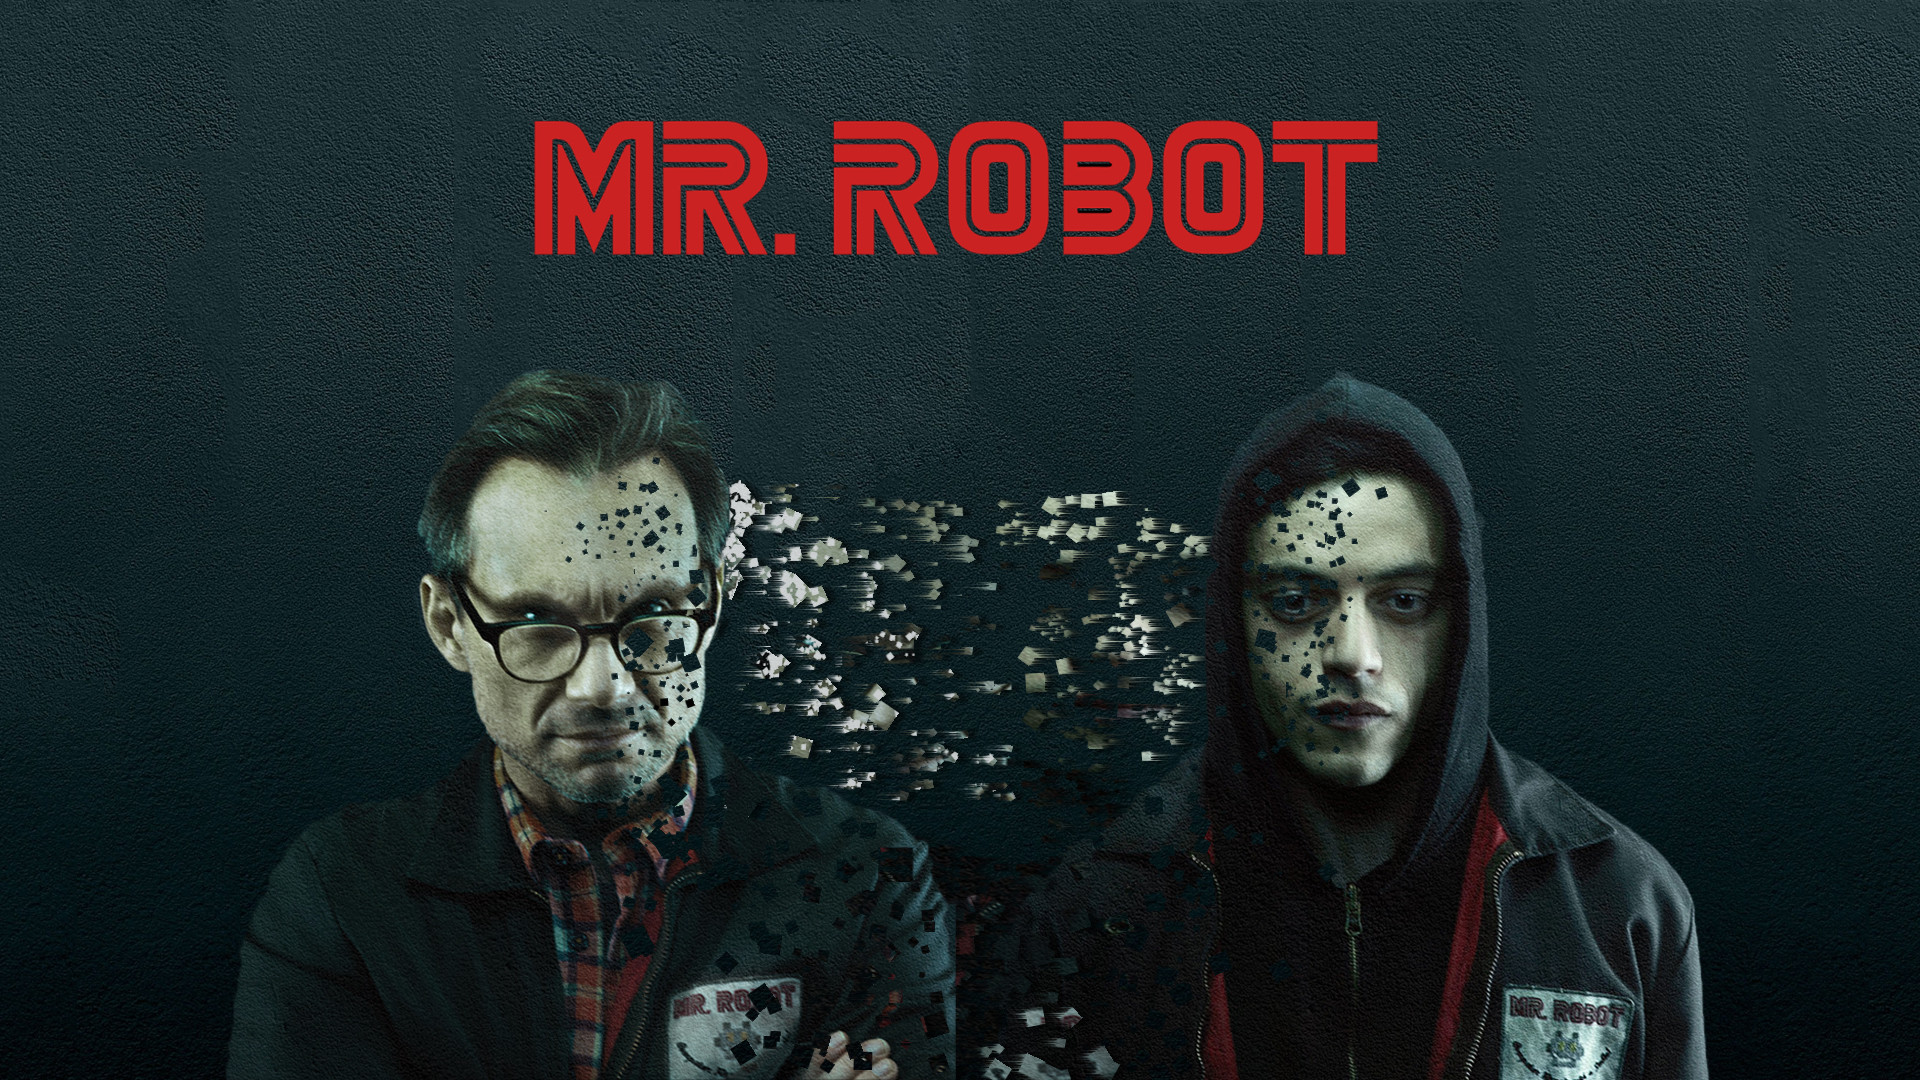 Mr Robot Wallpaper Pictures